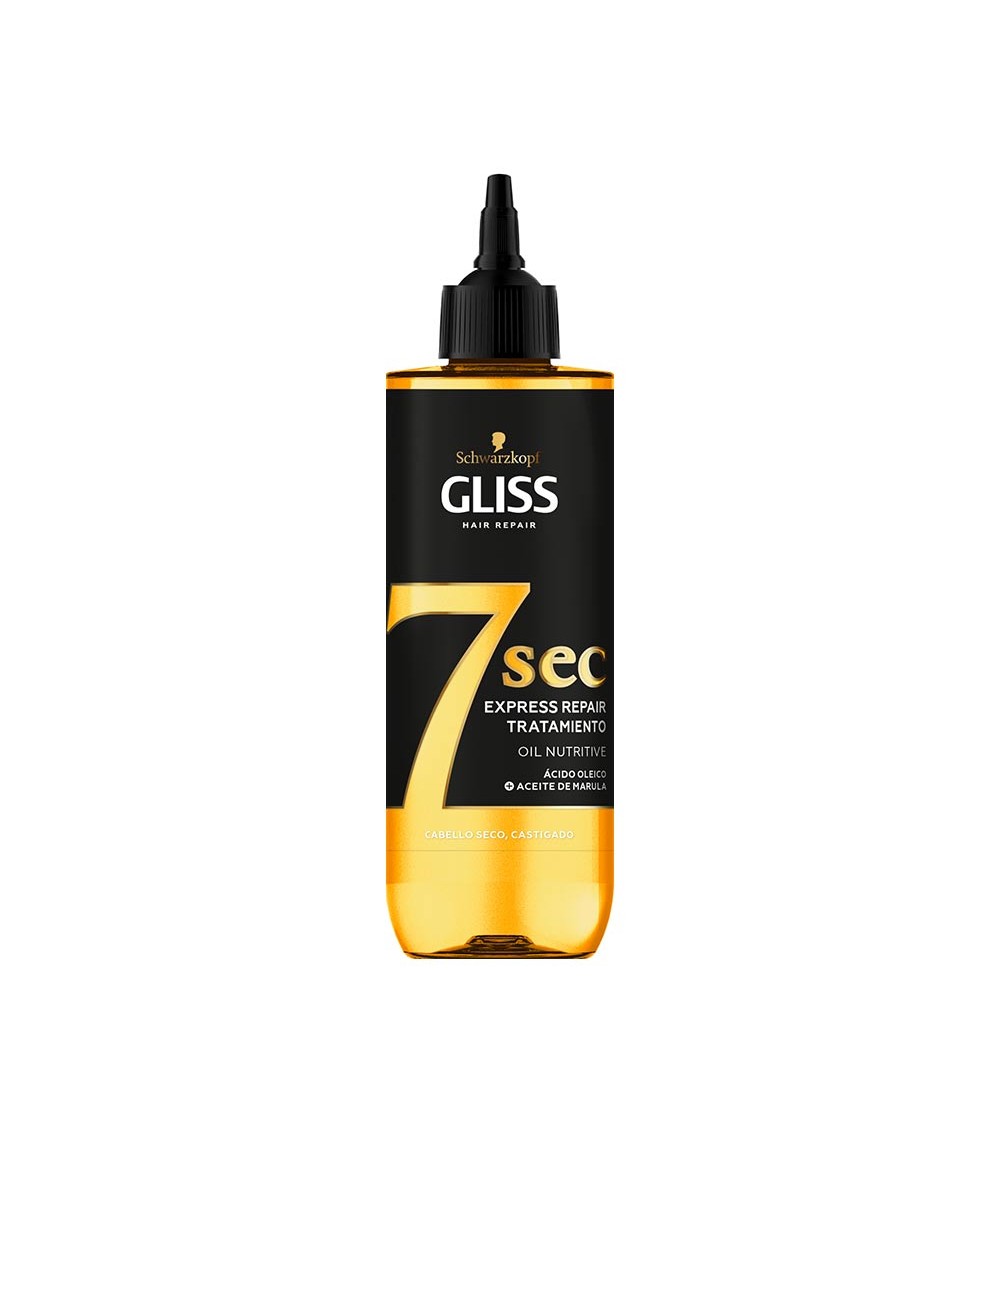 GLISS 7 SEC express repair treatment oil nutritive 200 ml